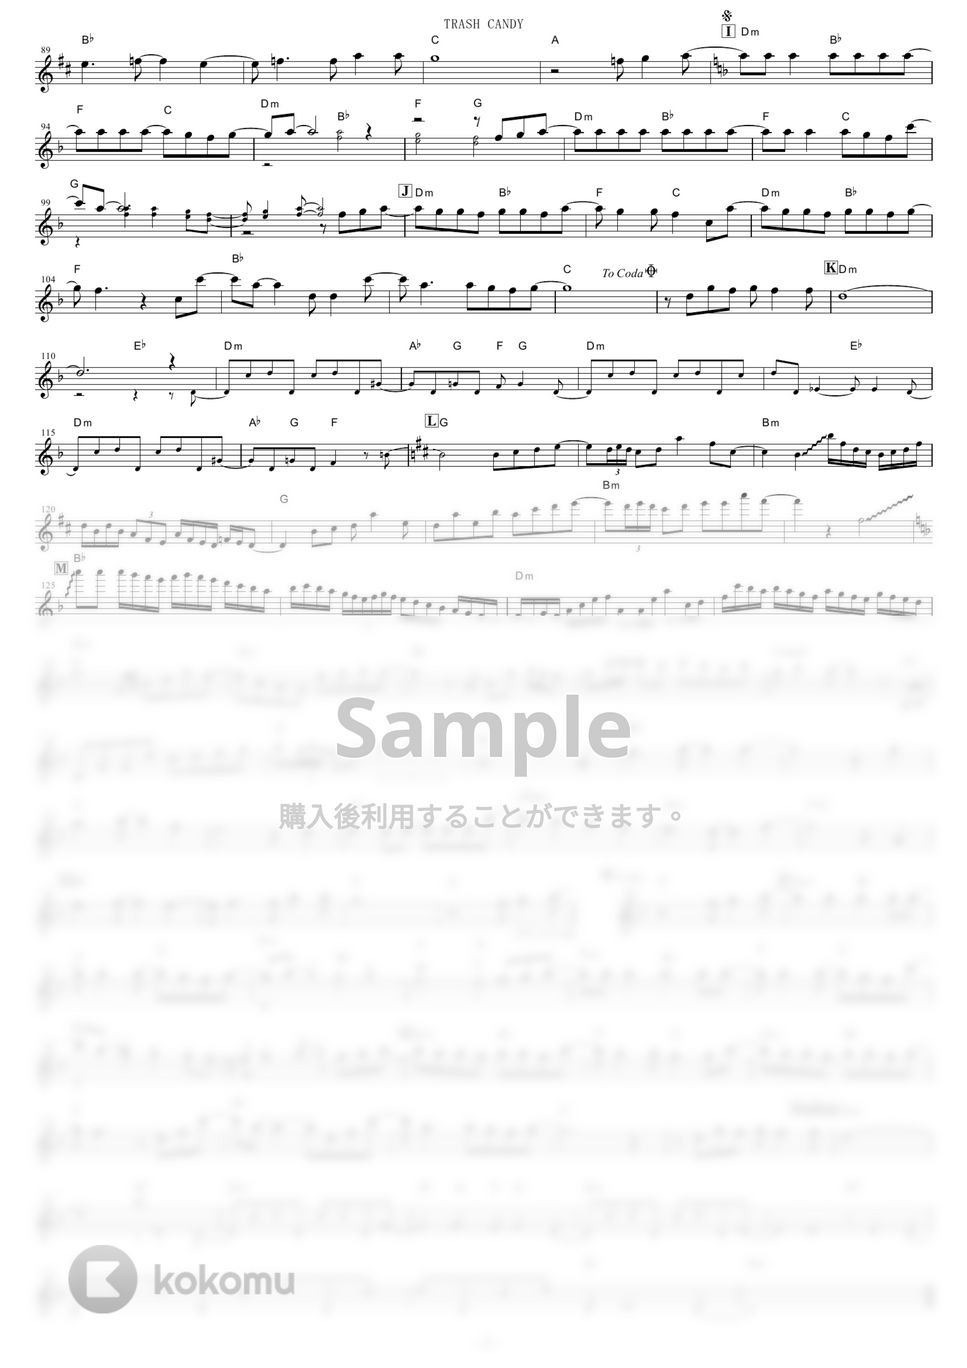 GRANRODEO - TRASH CANDY (『文豪ストレイドッグス』 / in C) by muta-sax